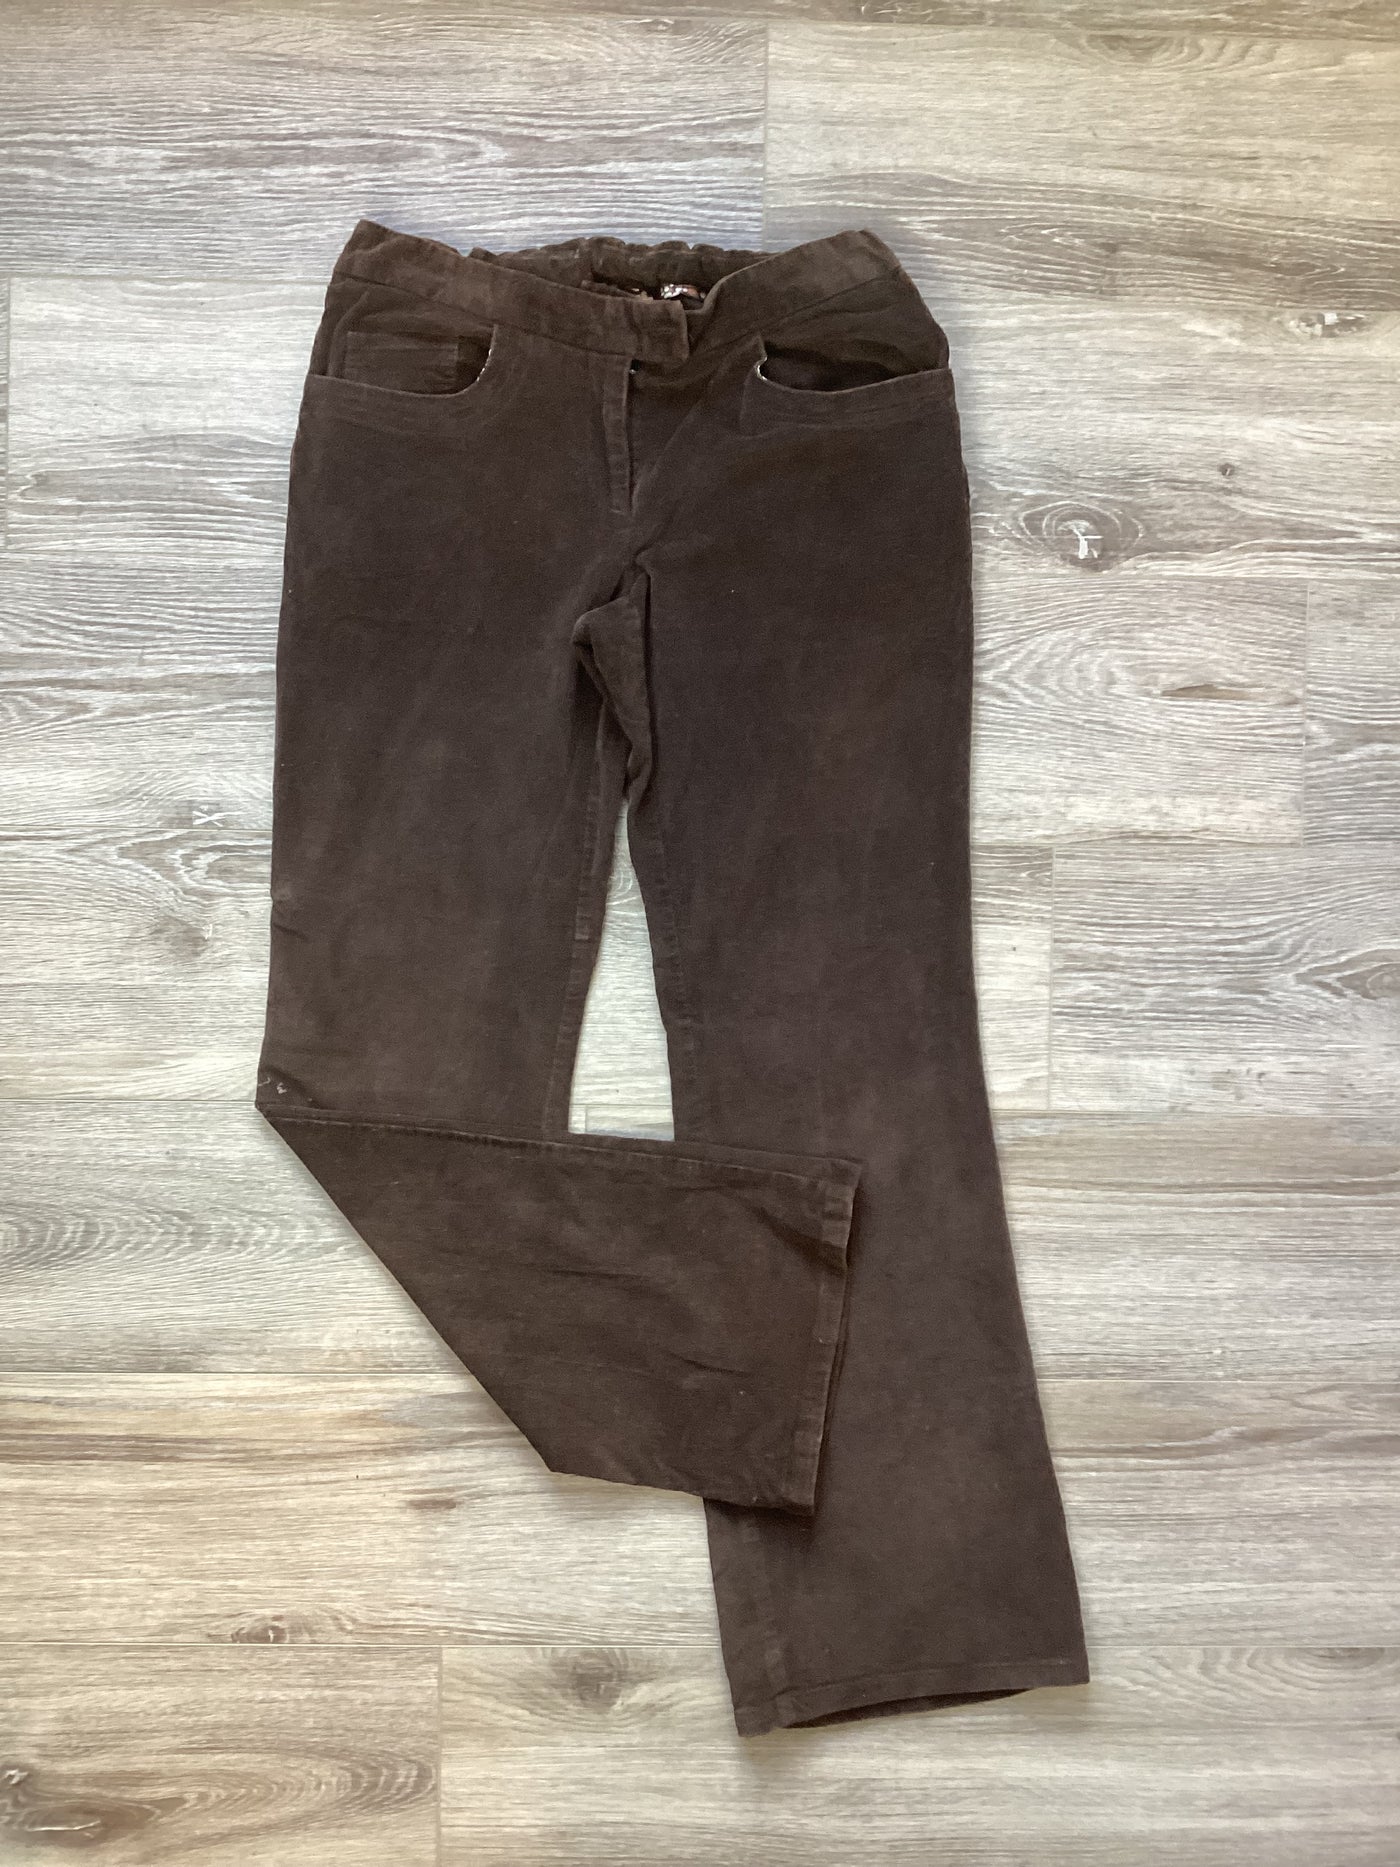 Liz Lange brown cord bootcut trousers - Size 1 (Approx UK 8/10)